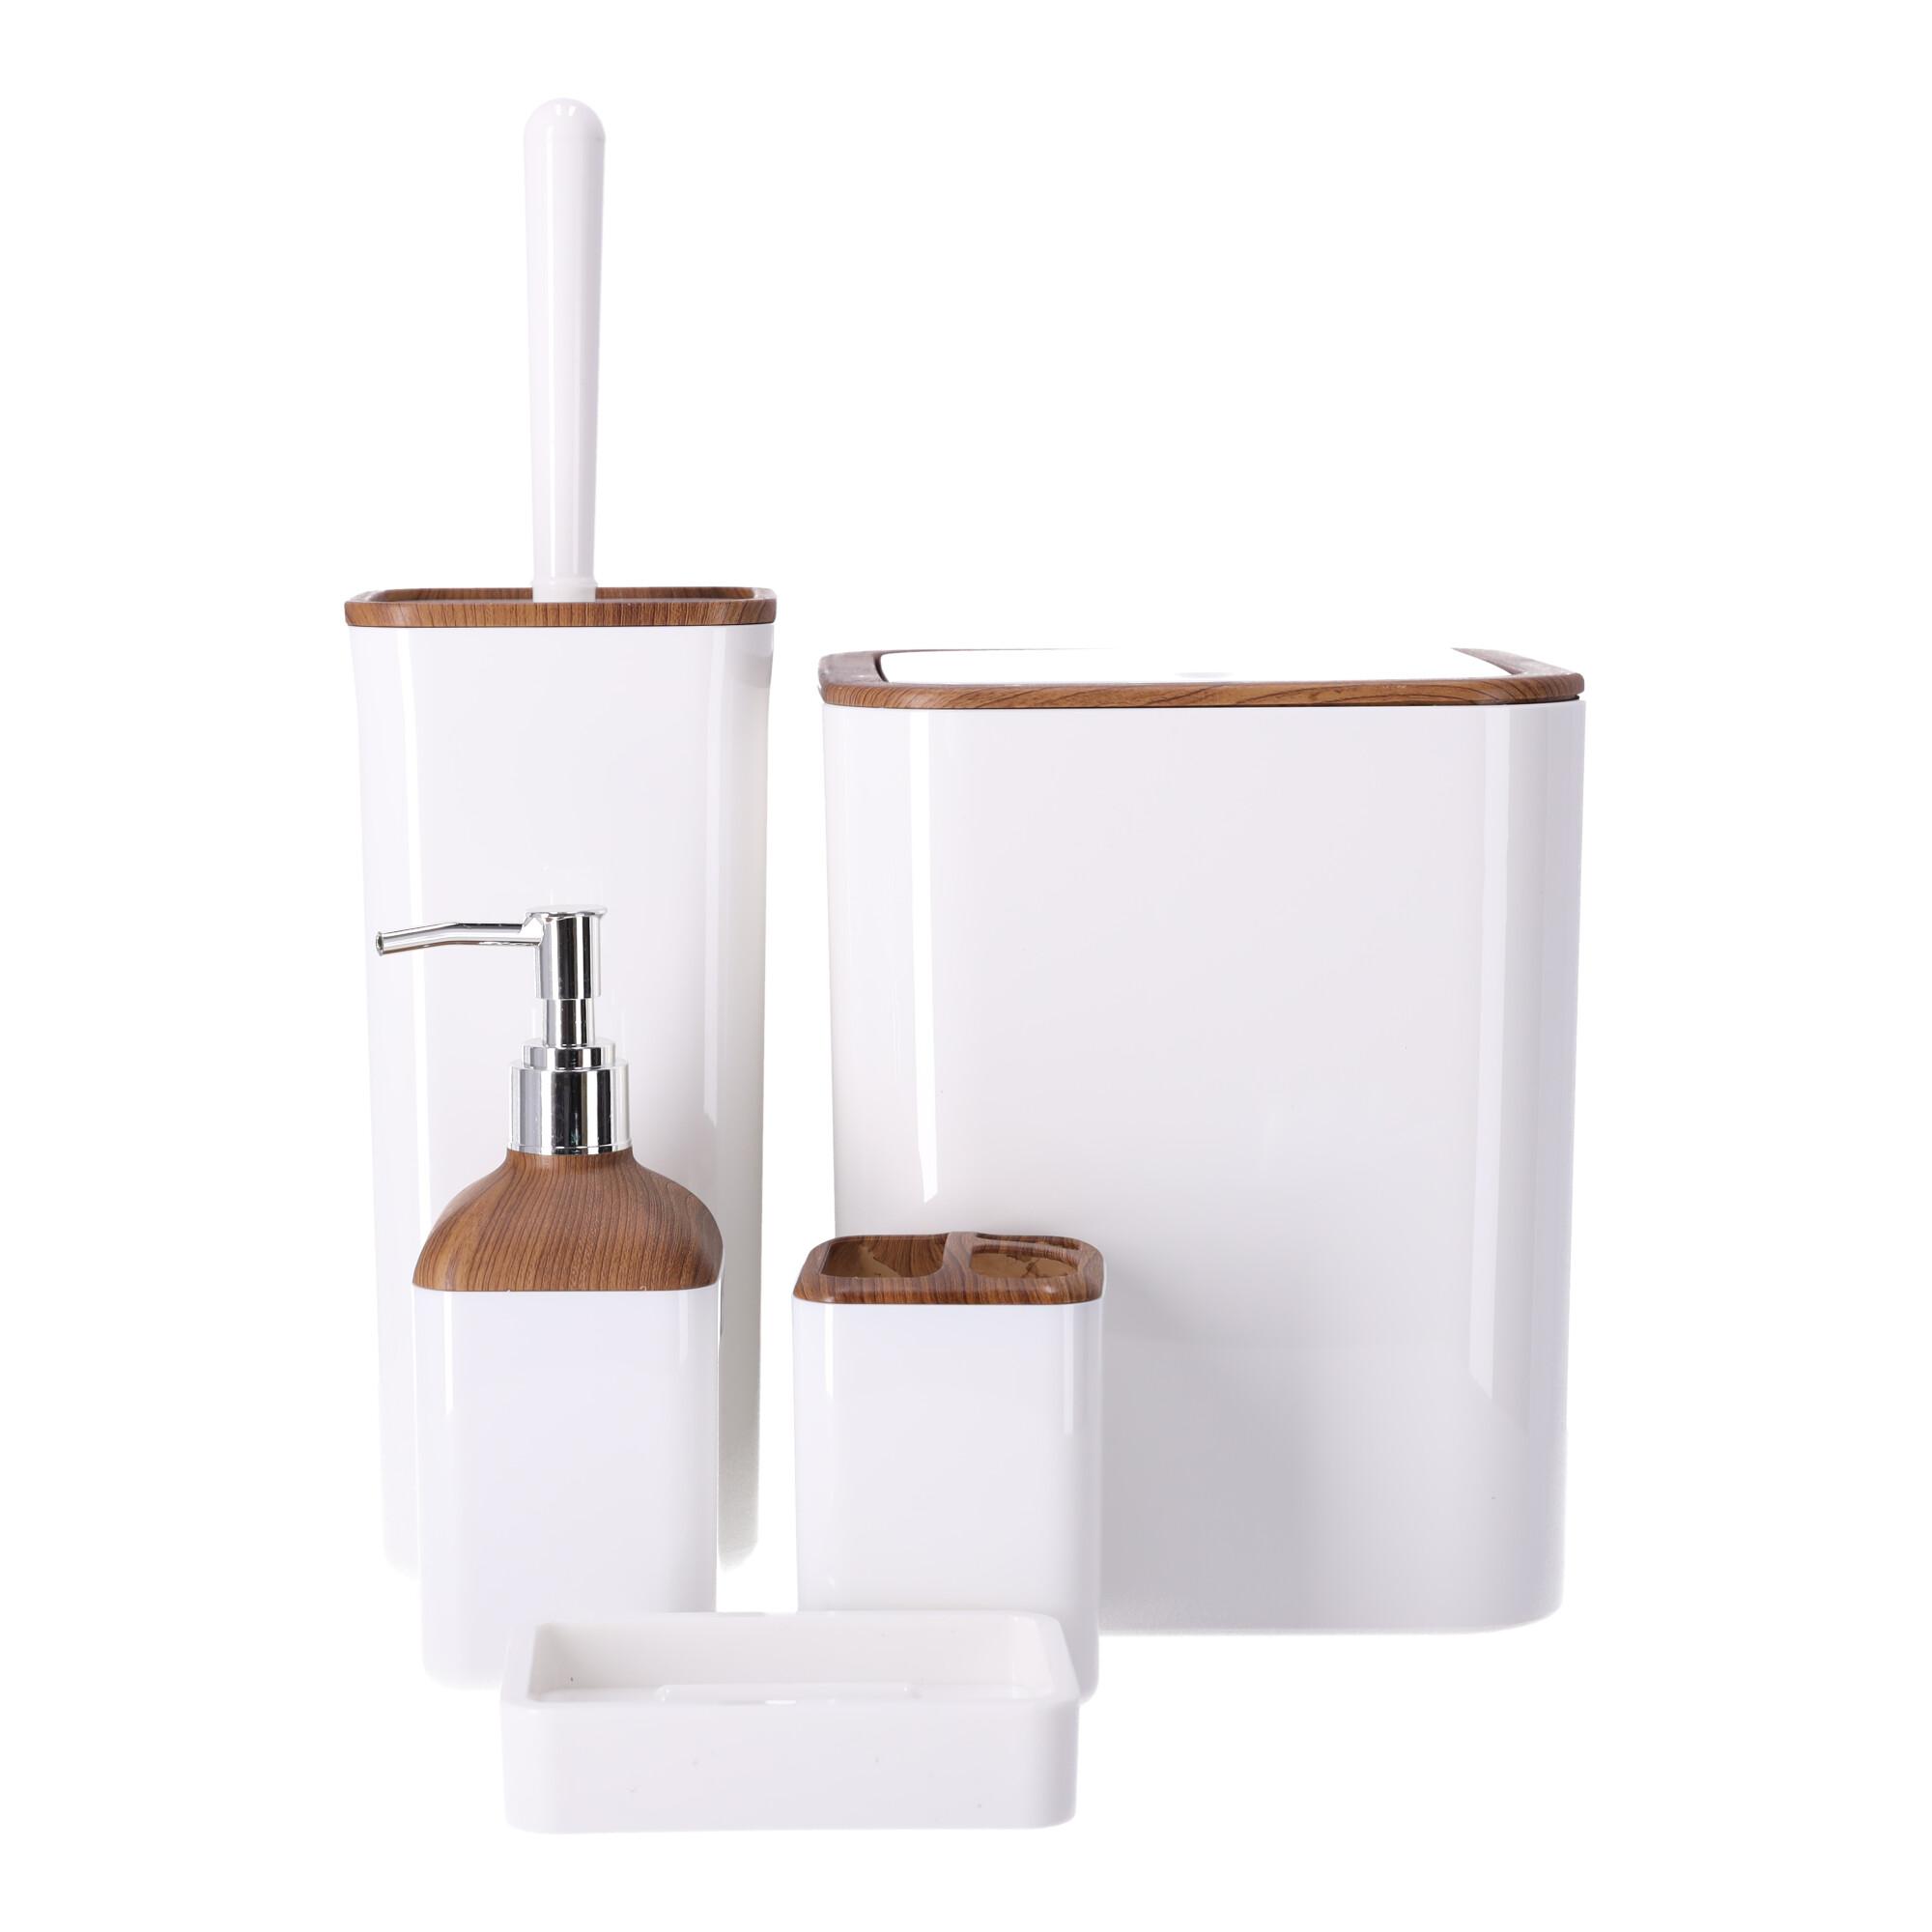 Bathroom accessories set of 5 items BERRETTI, white + wood